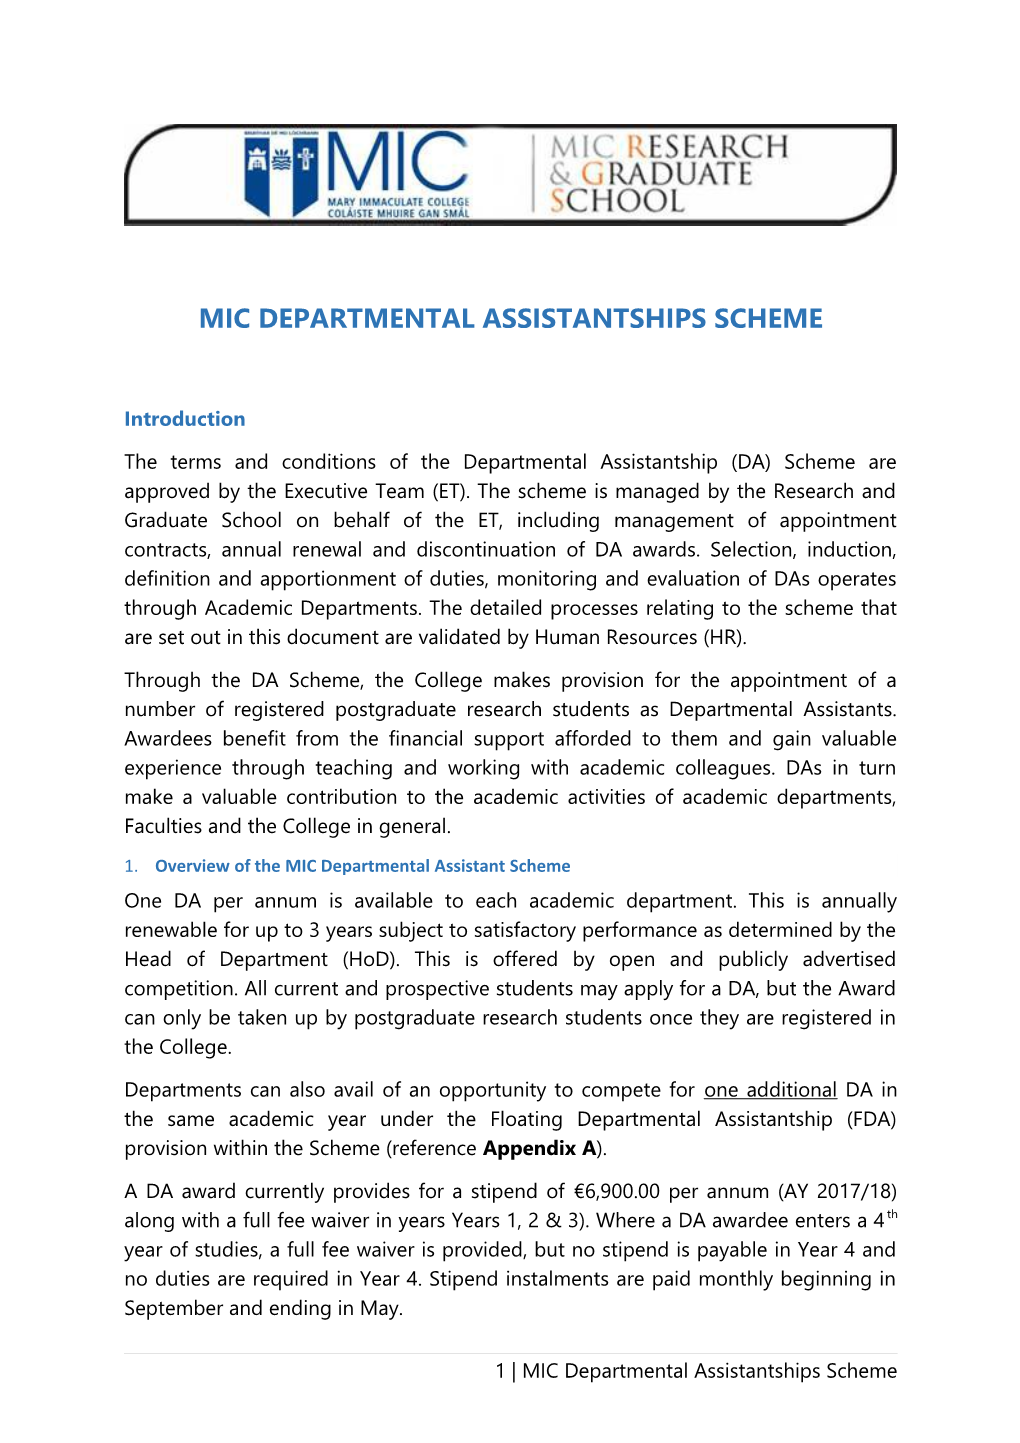 MIC Departmental Assistantships Scheme